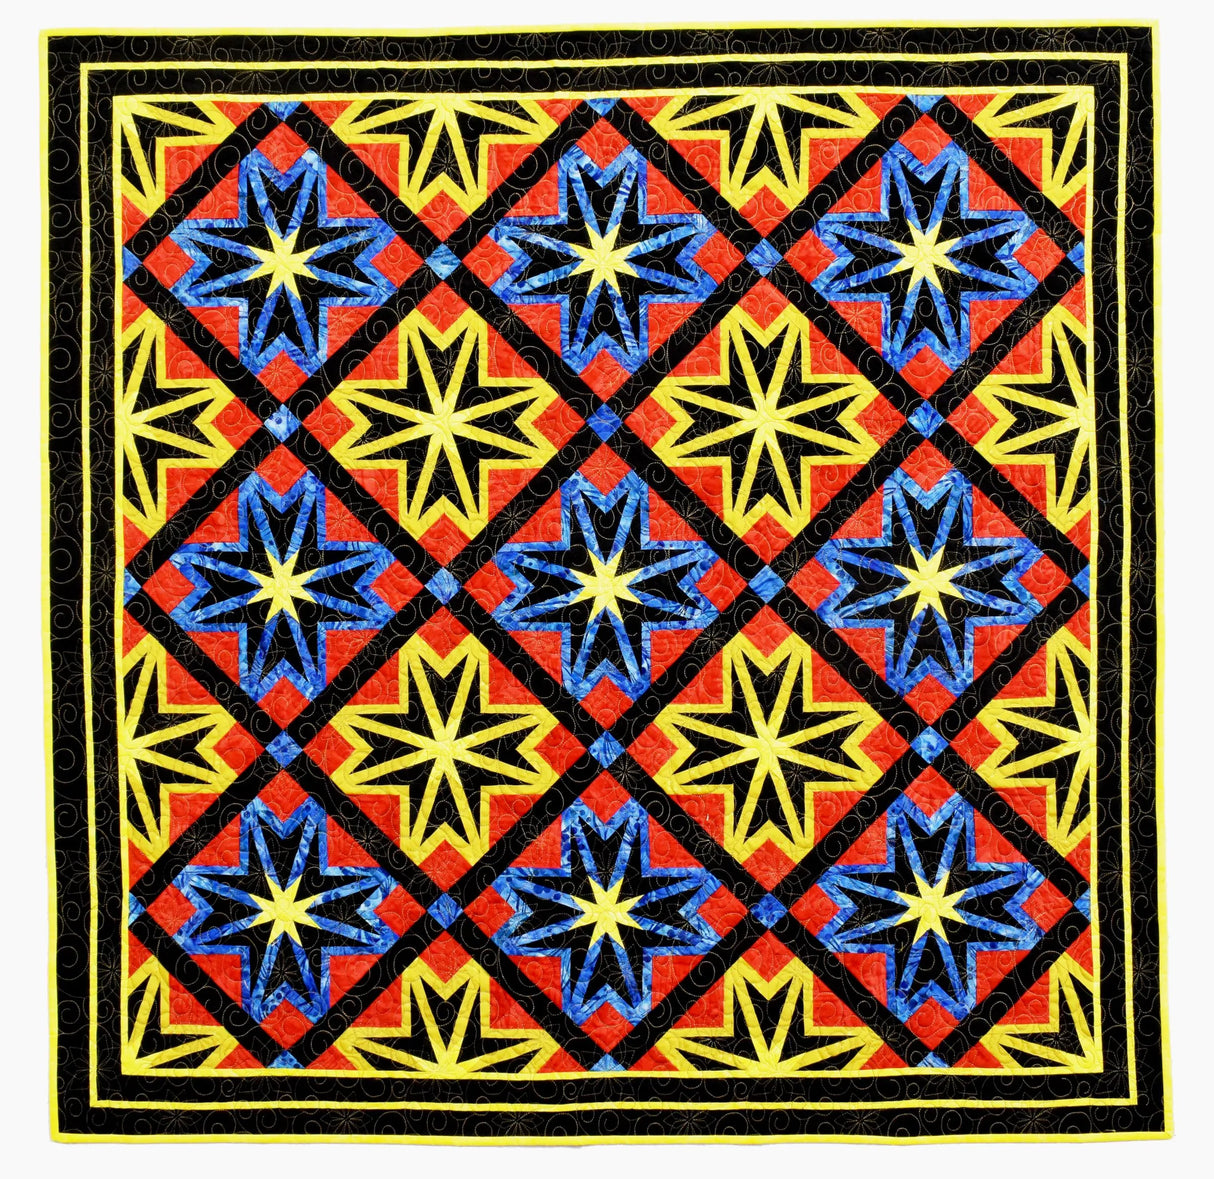 Criss Cross Stars Downloadable Pattern by Nancy Messuri Designs